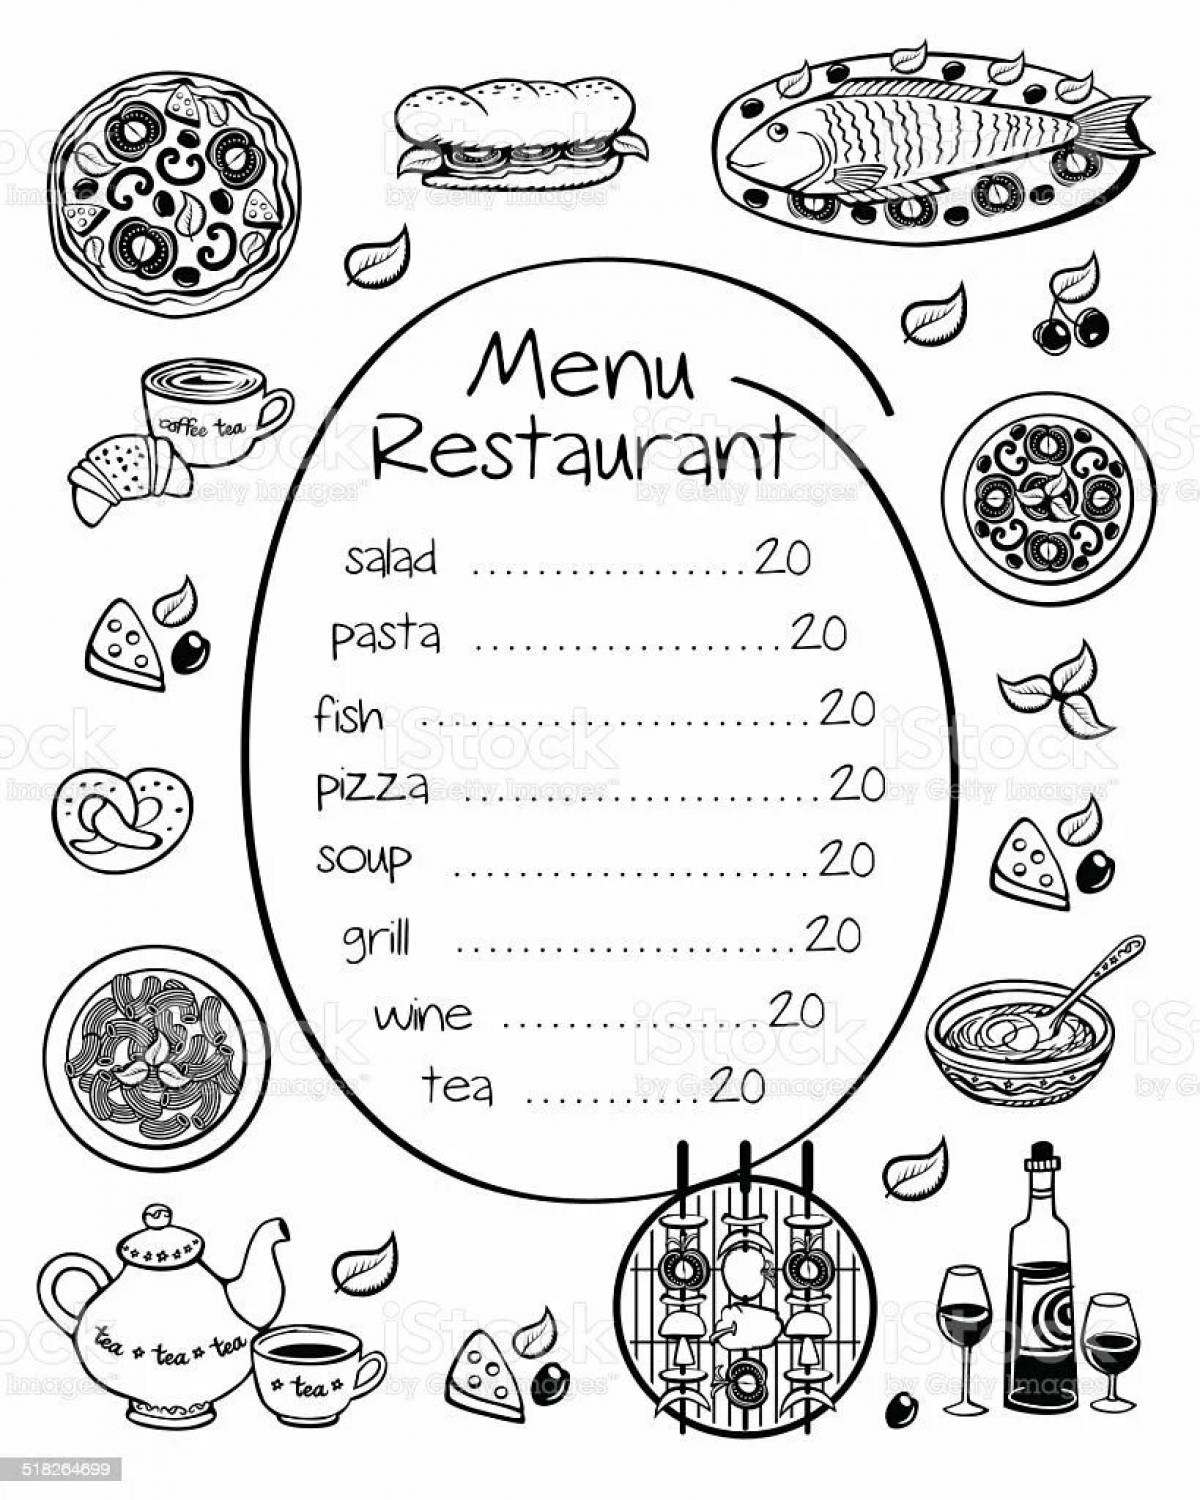 Adventure restaurant menu coloring page